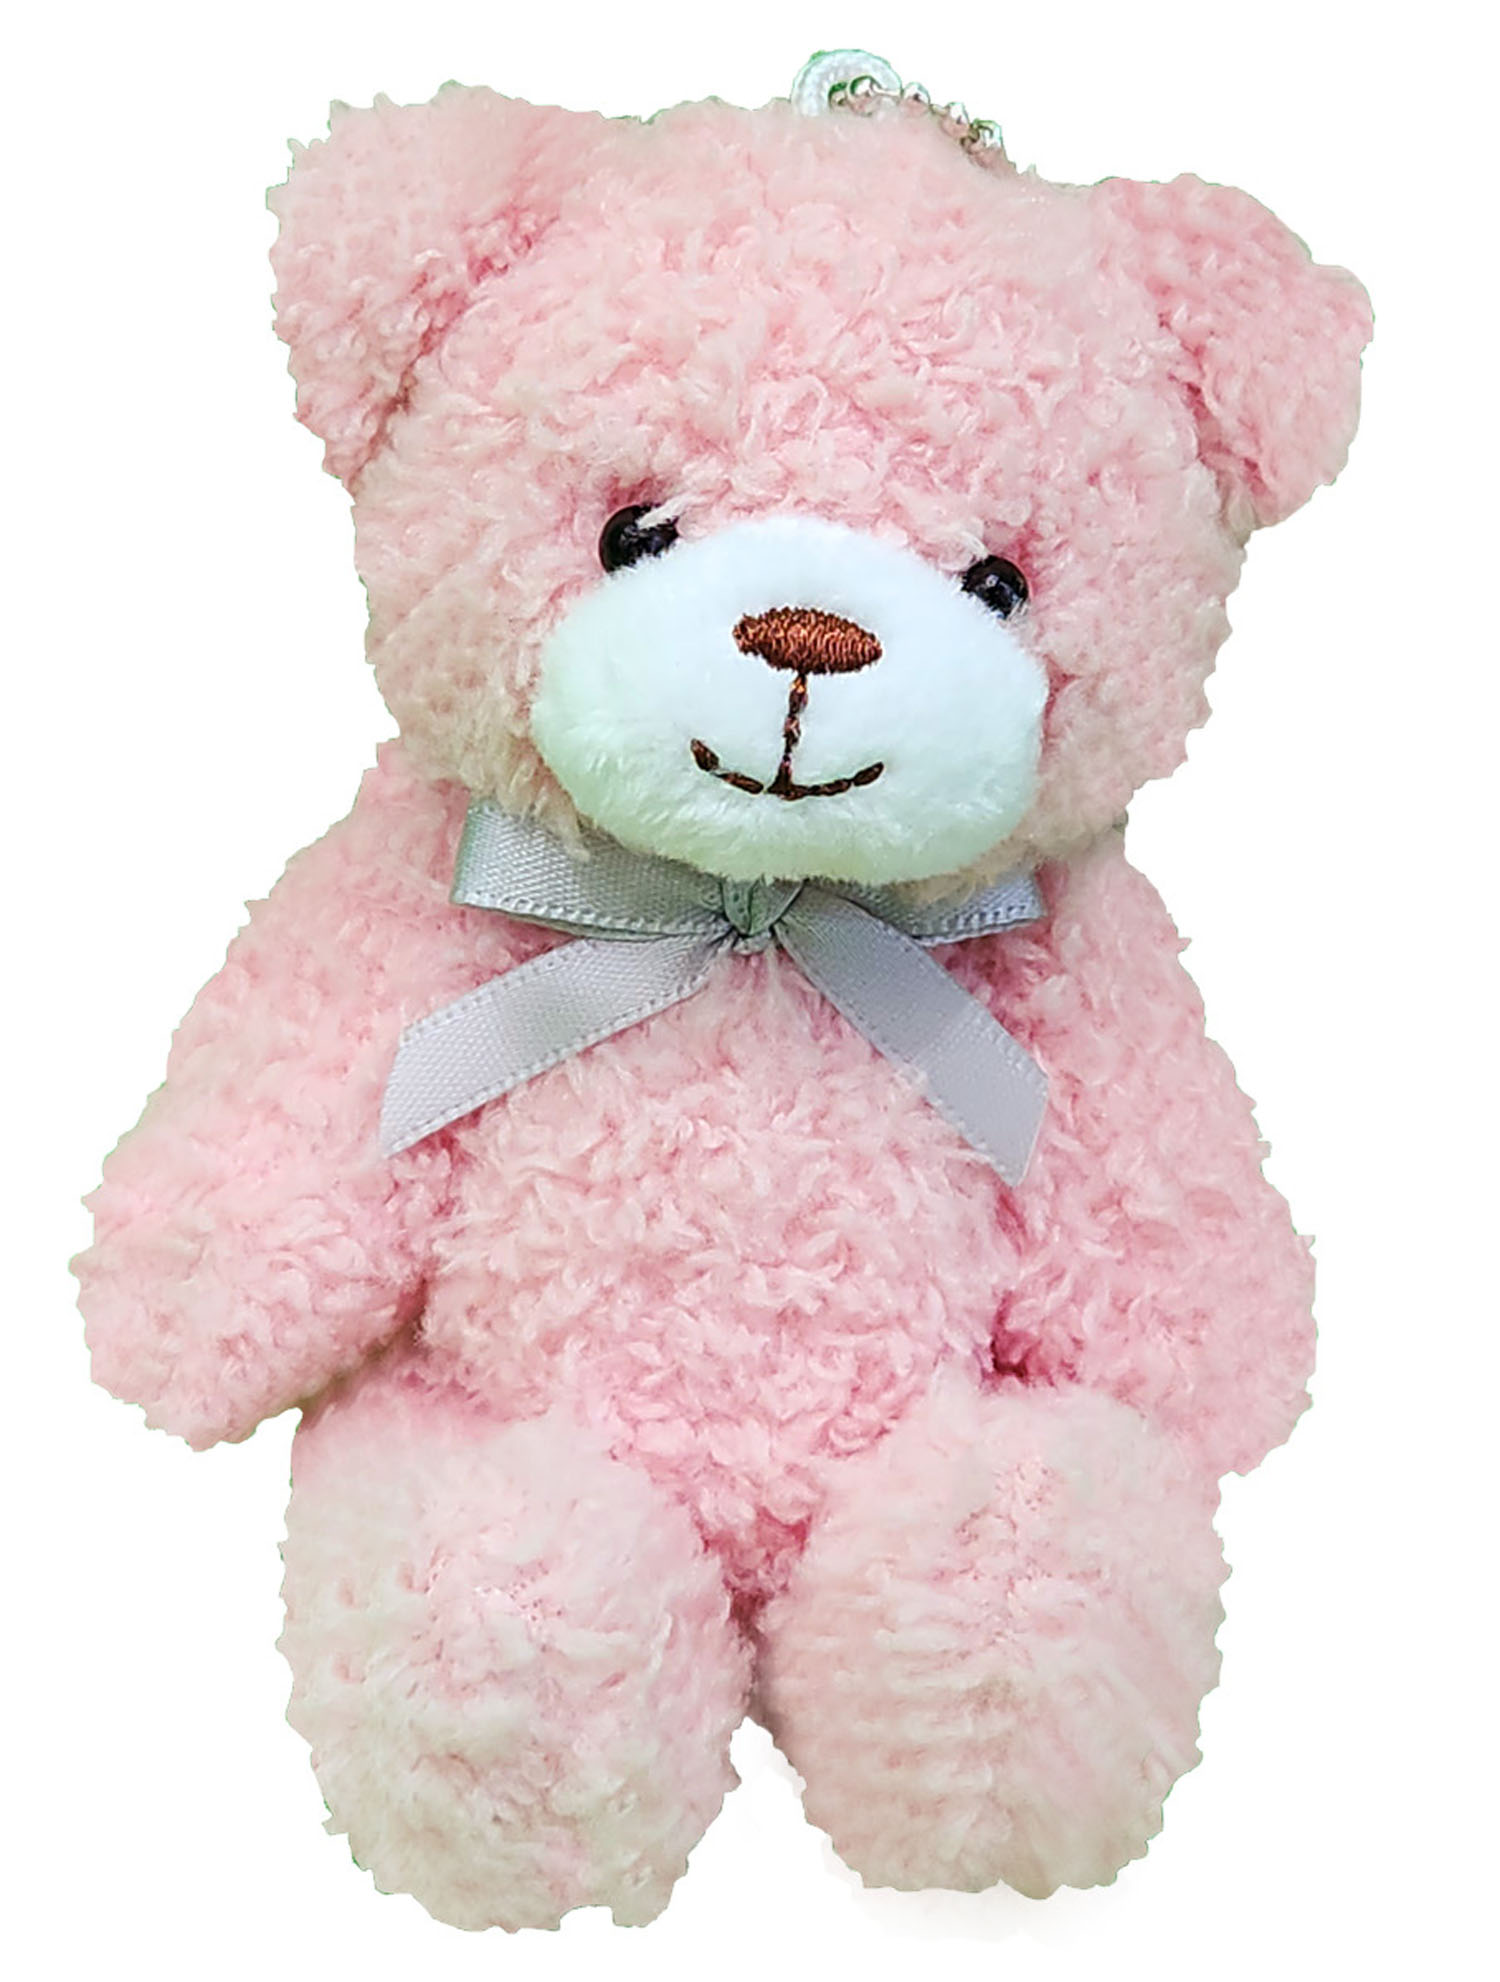 Mini mascot with ball chain, ribbon bear, pink